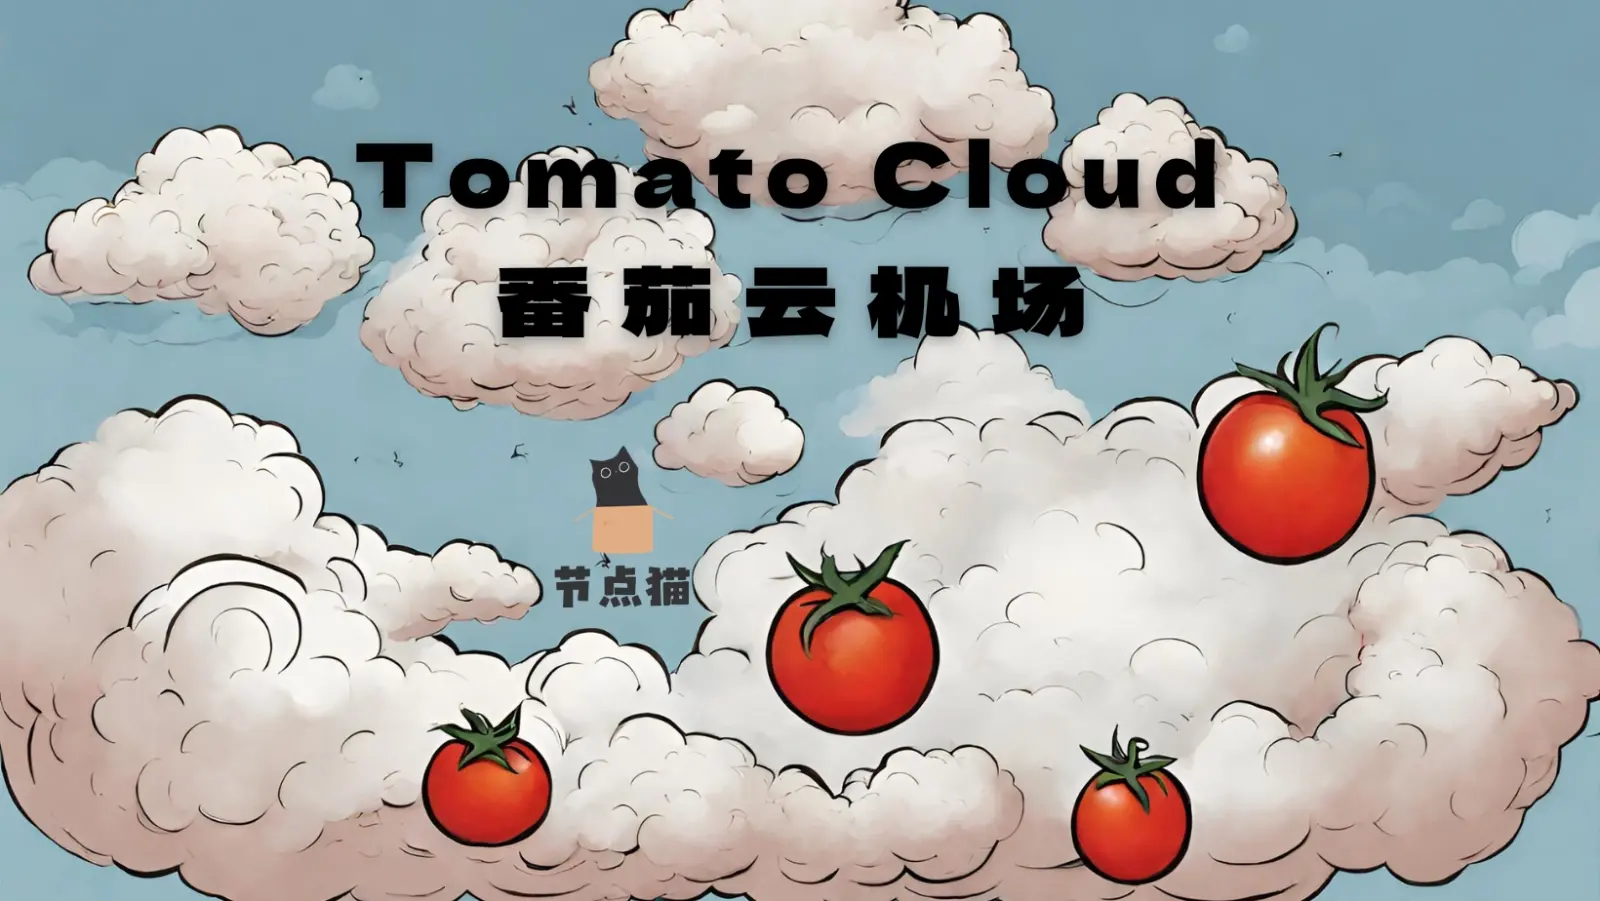 Tomato Cloud 机场 番茄云